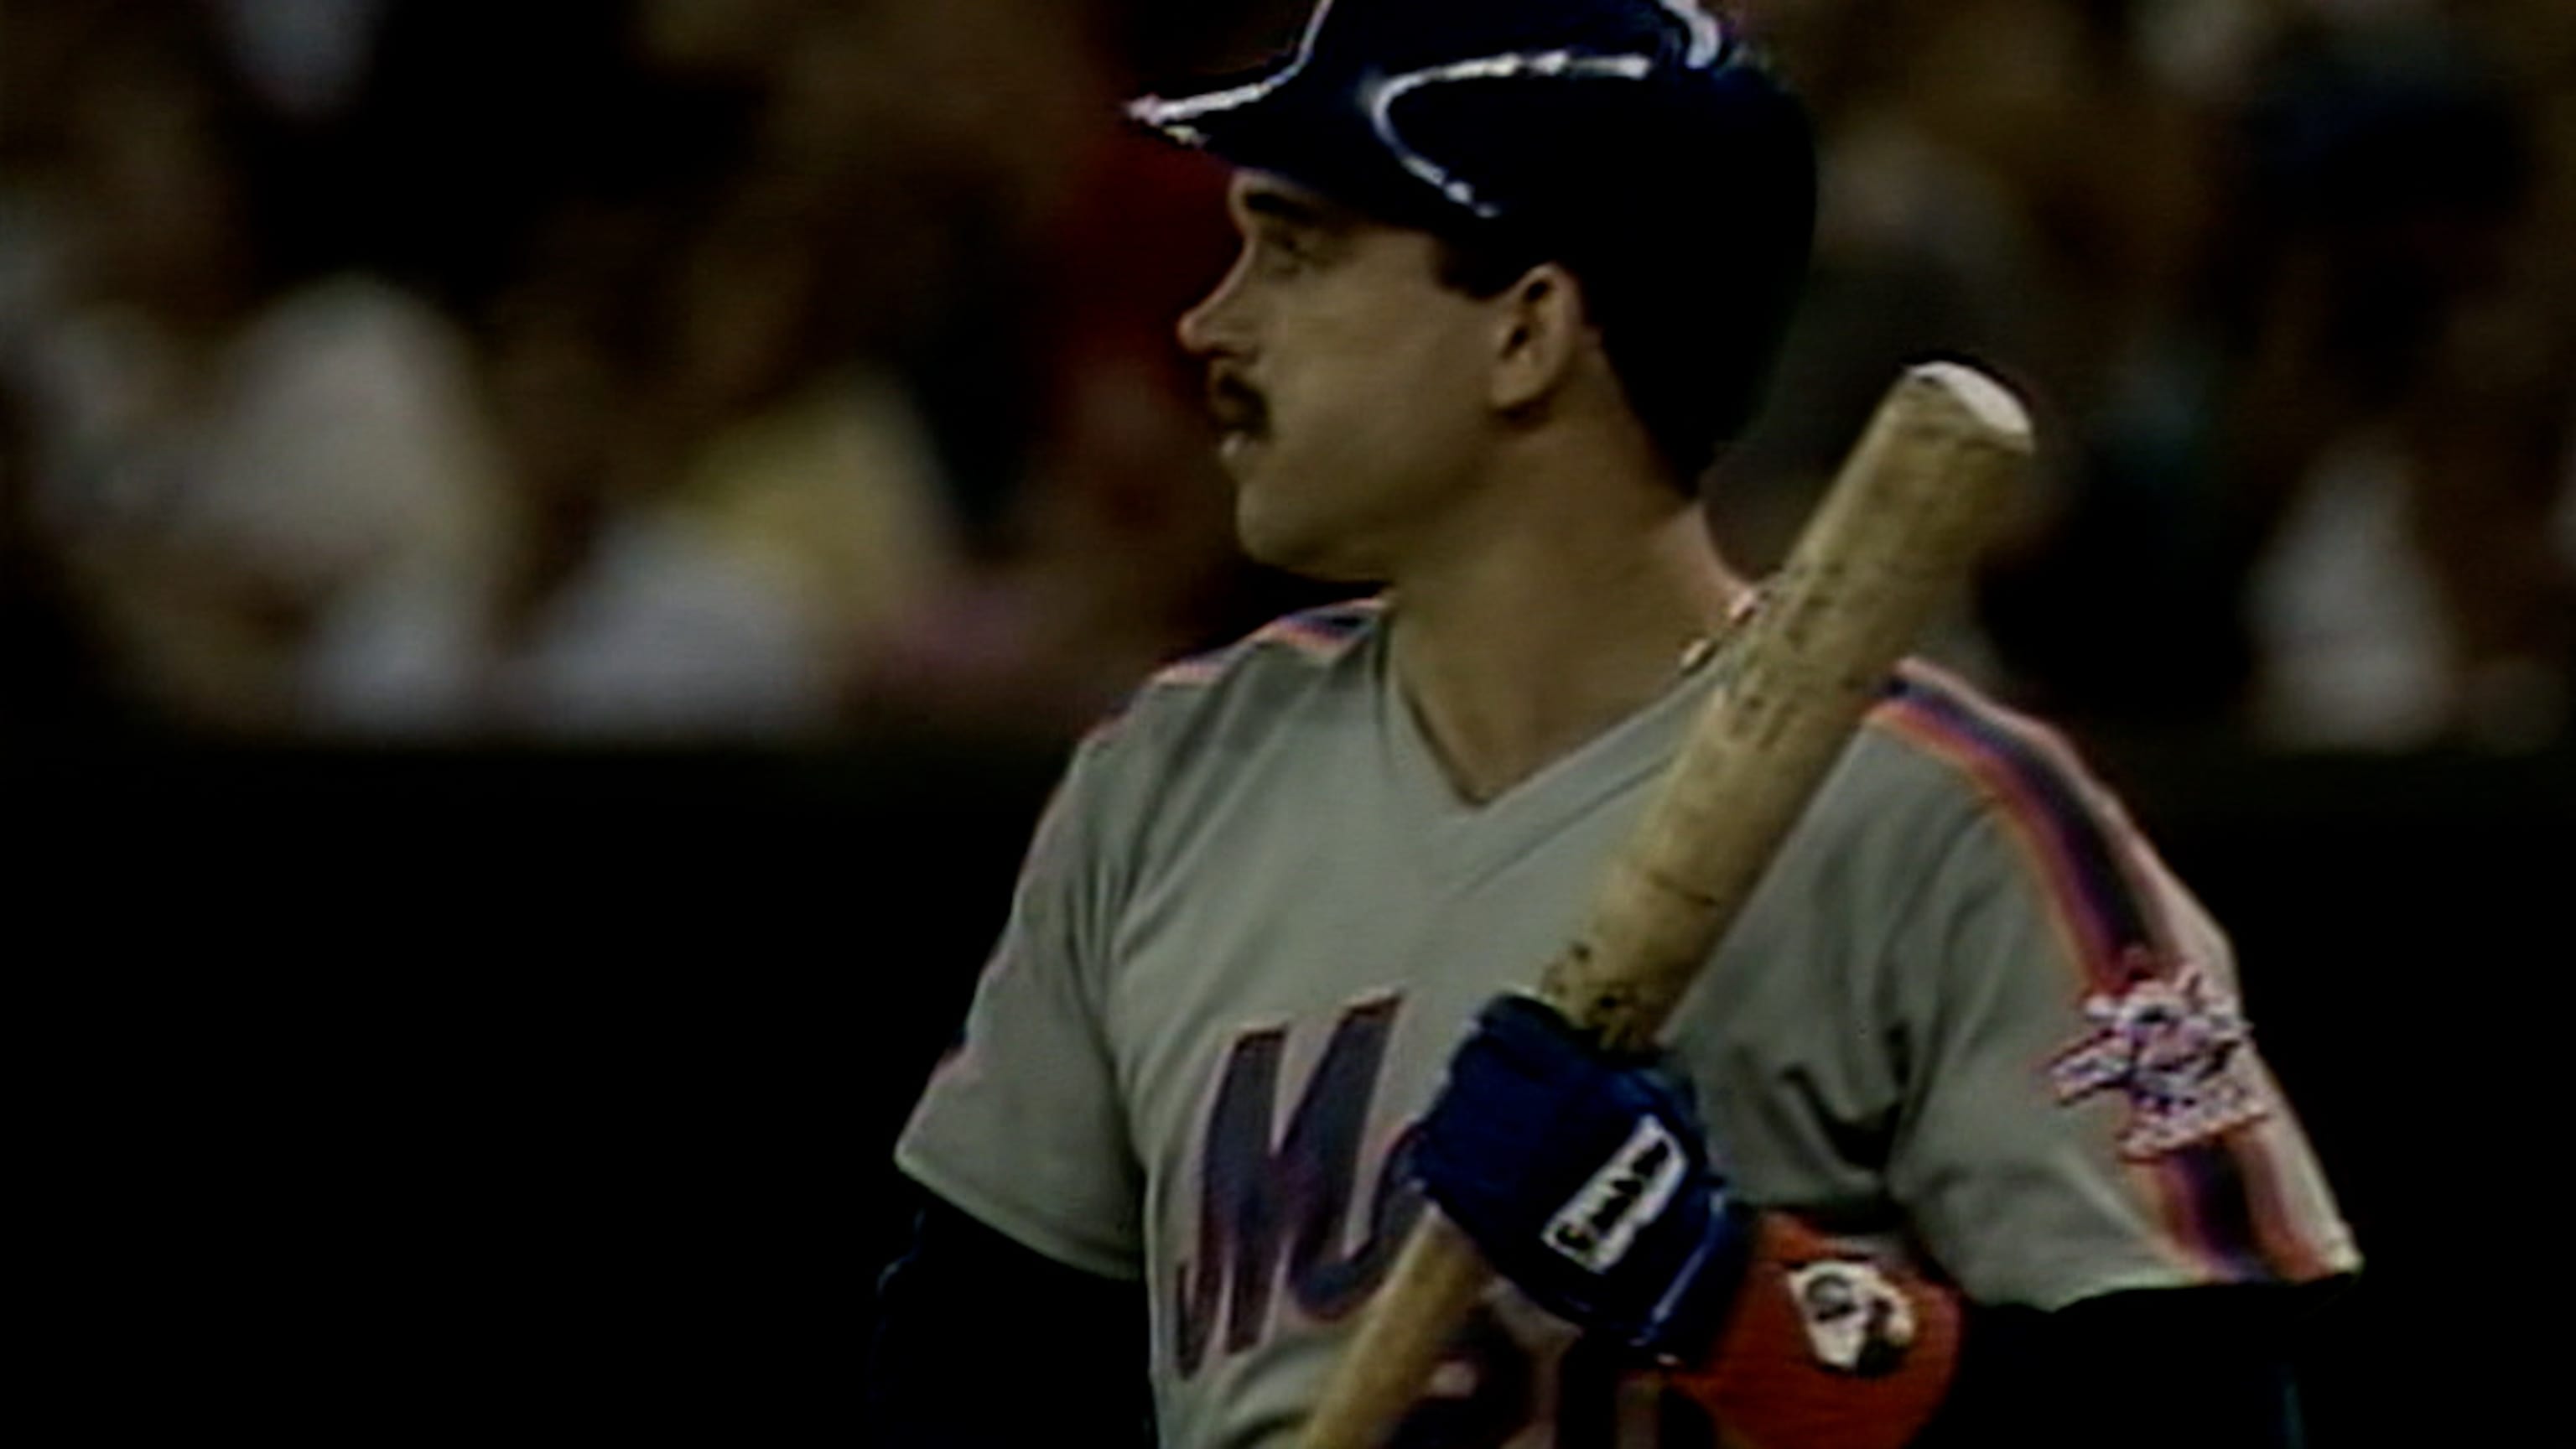 Howard Johnson New York Mets 1986 World Series Champions